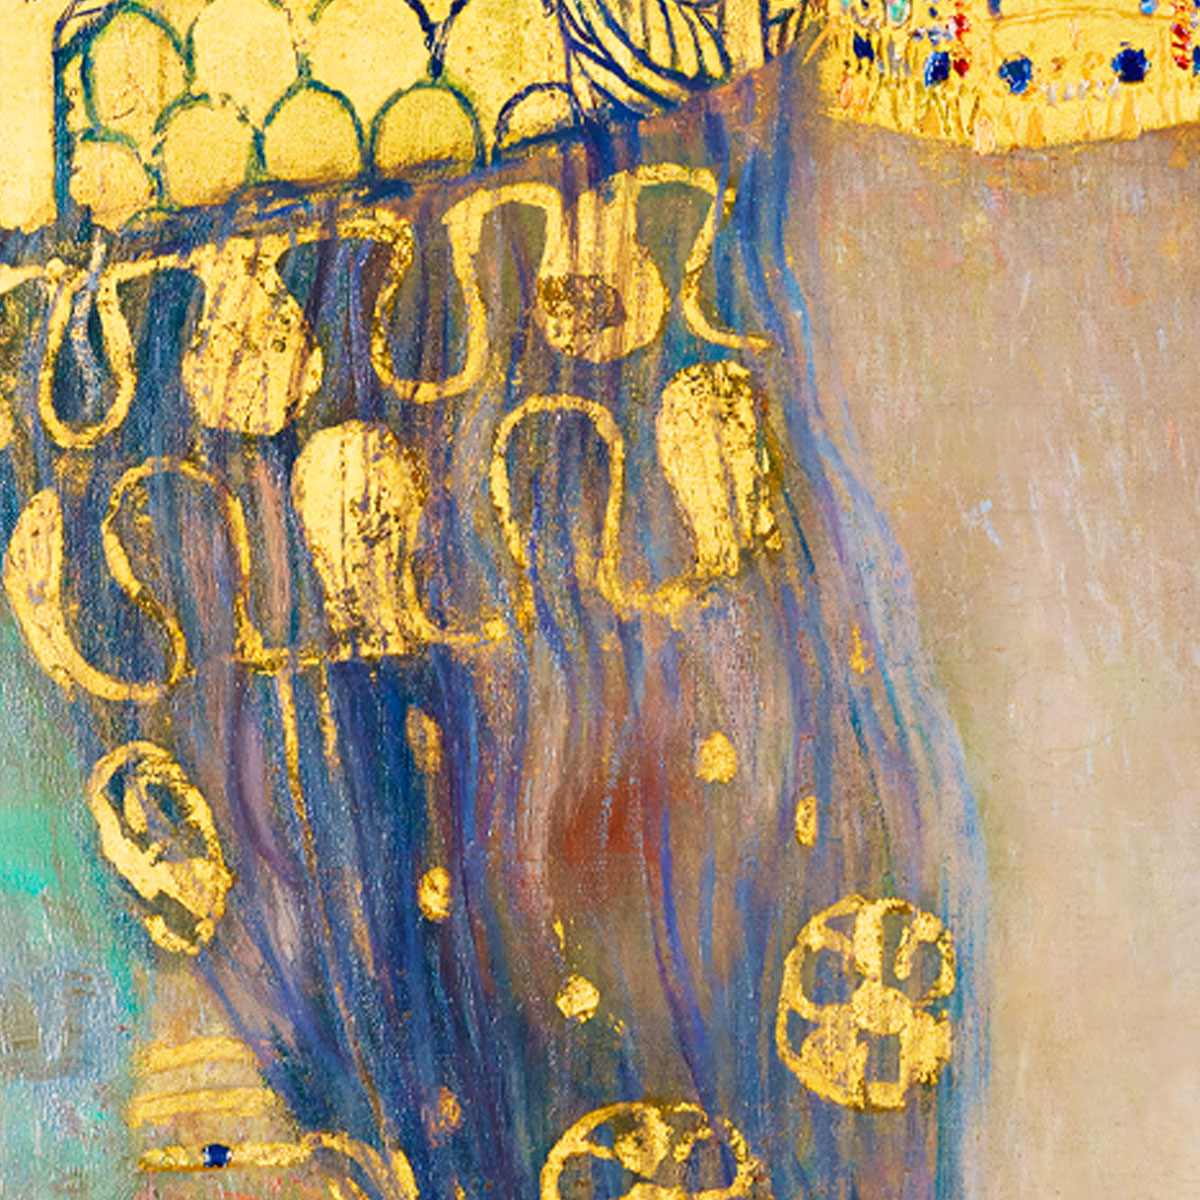 Judith & The Head of Holofernes by Gustav Klimt